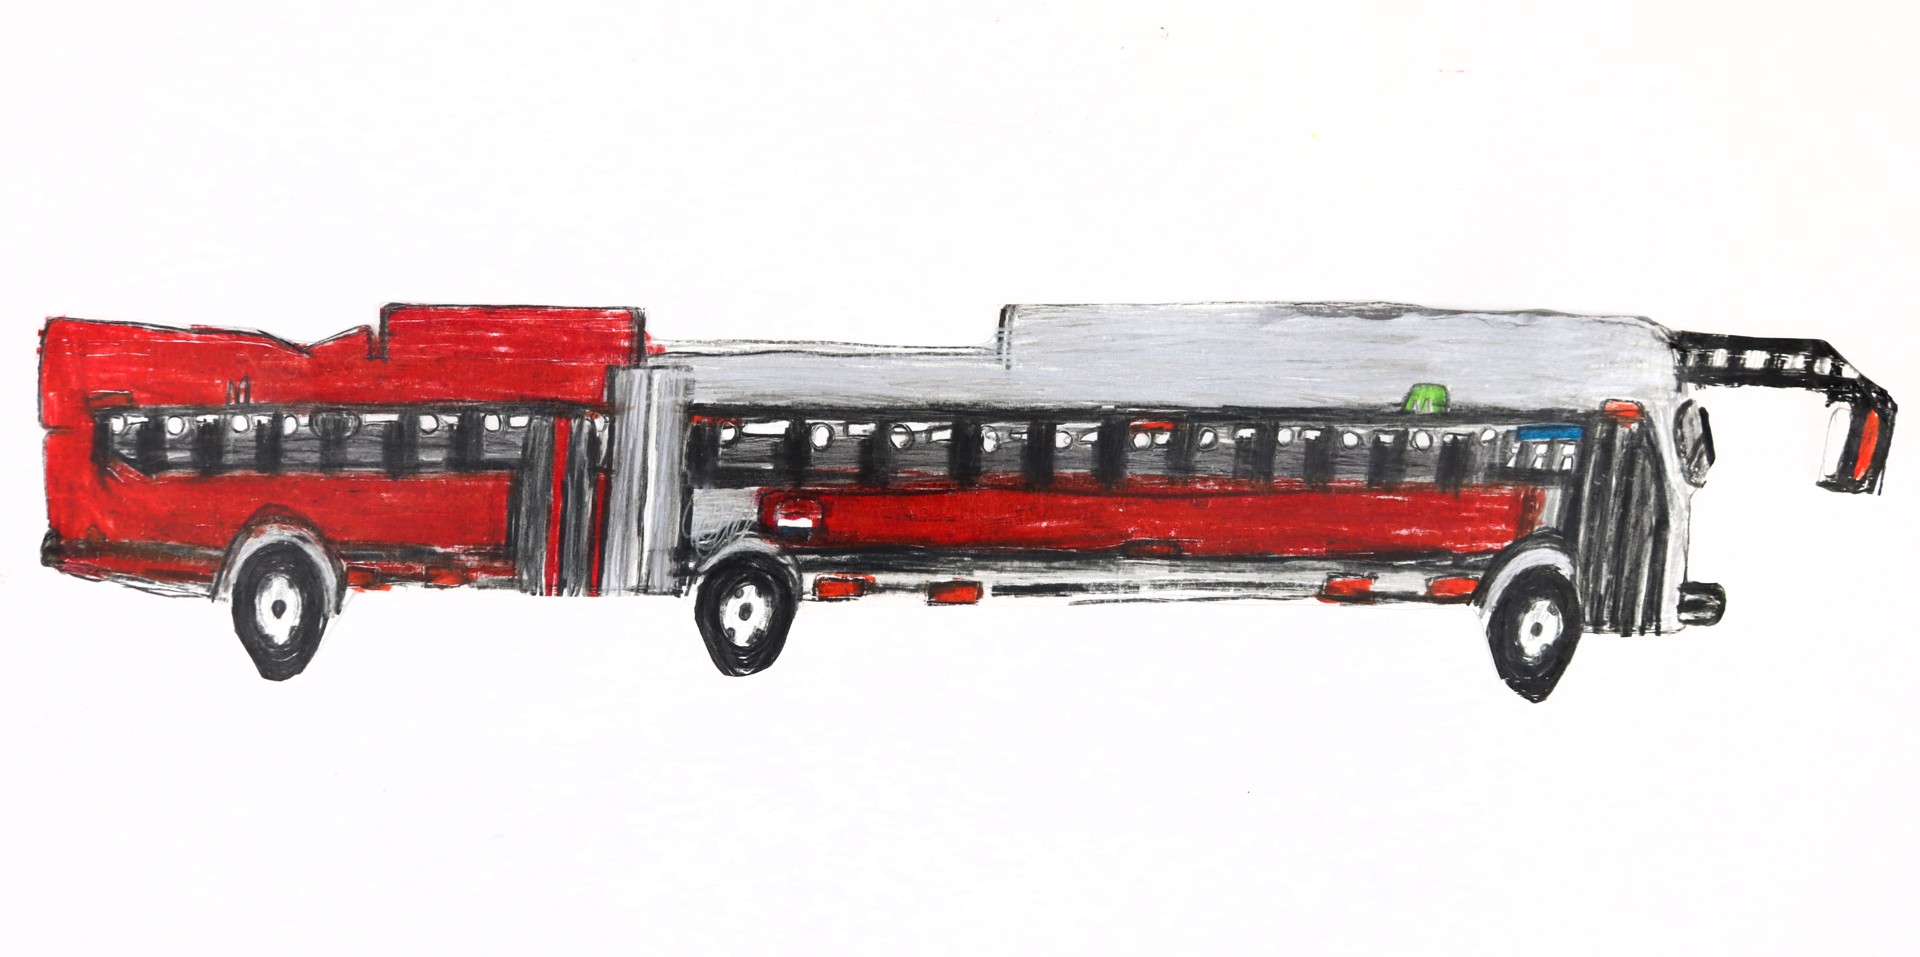 Double Metro Bus by Michael Haynes